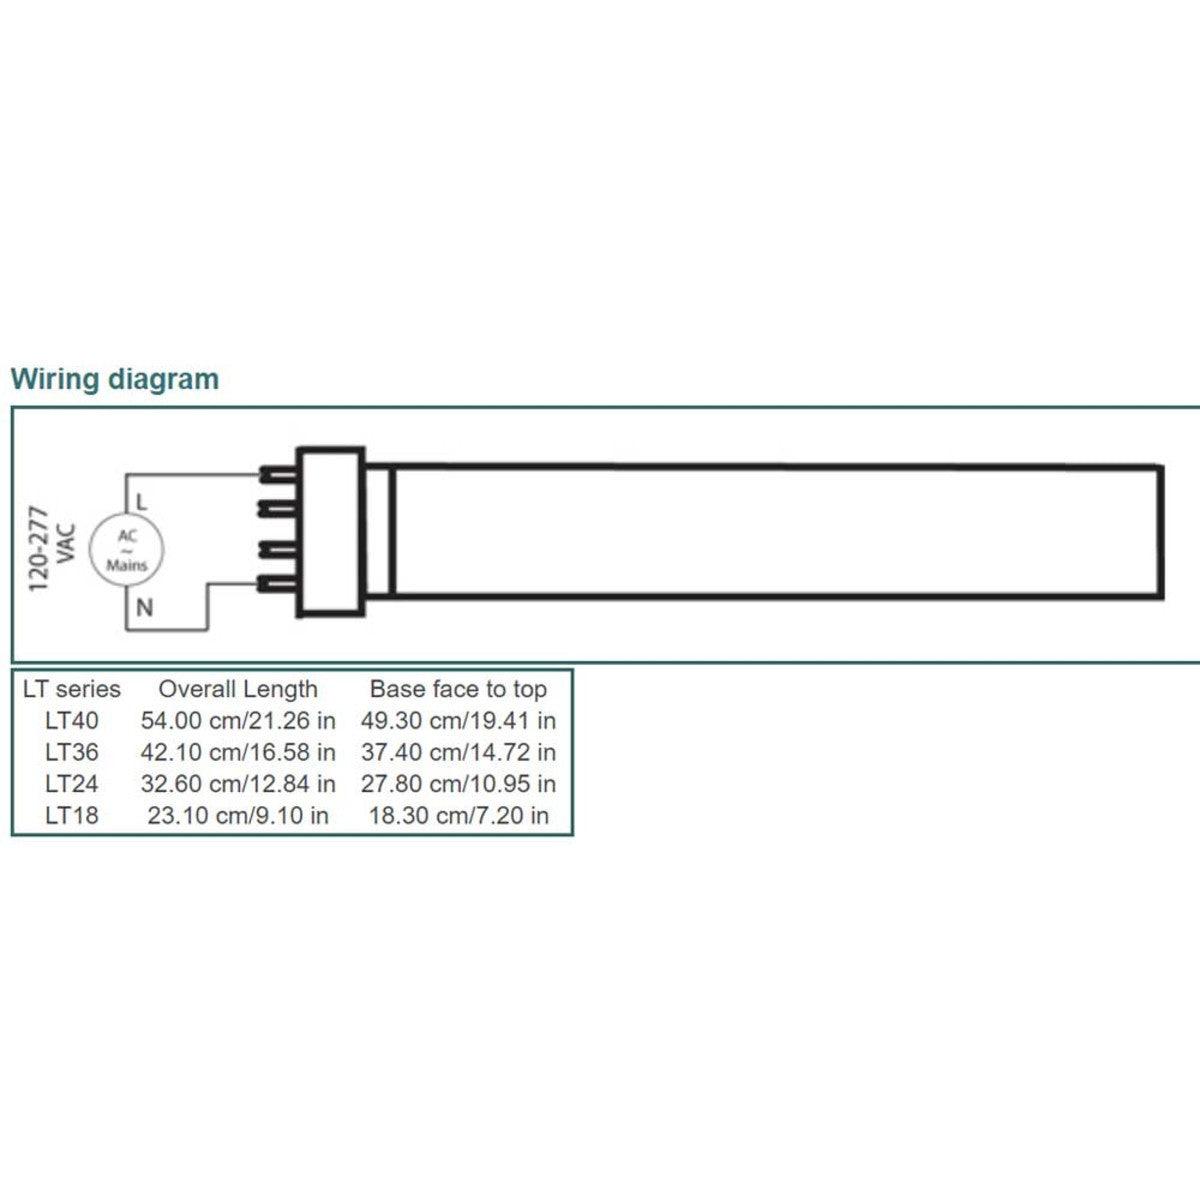 4 Pin PLL LED Bulb, 15 Watt 1600 Lumens, 3500K, Omnidirectional, Replaces 36W CFL, 2G11 Base, Type B Ballast Bypass